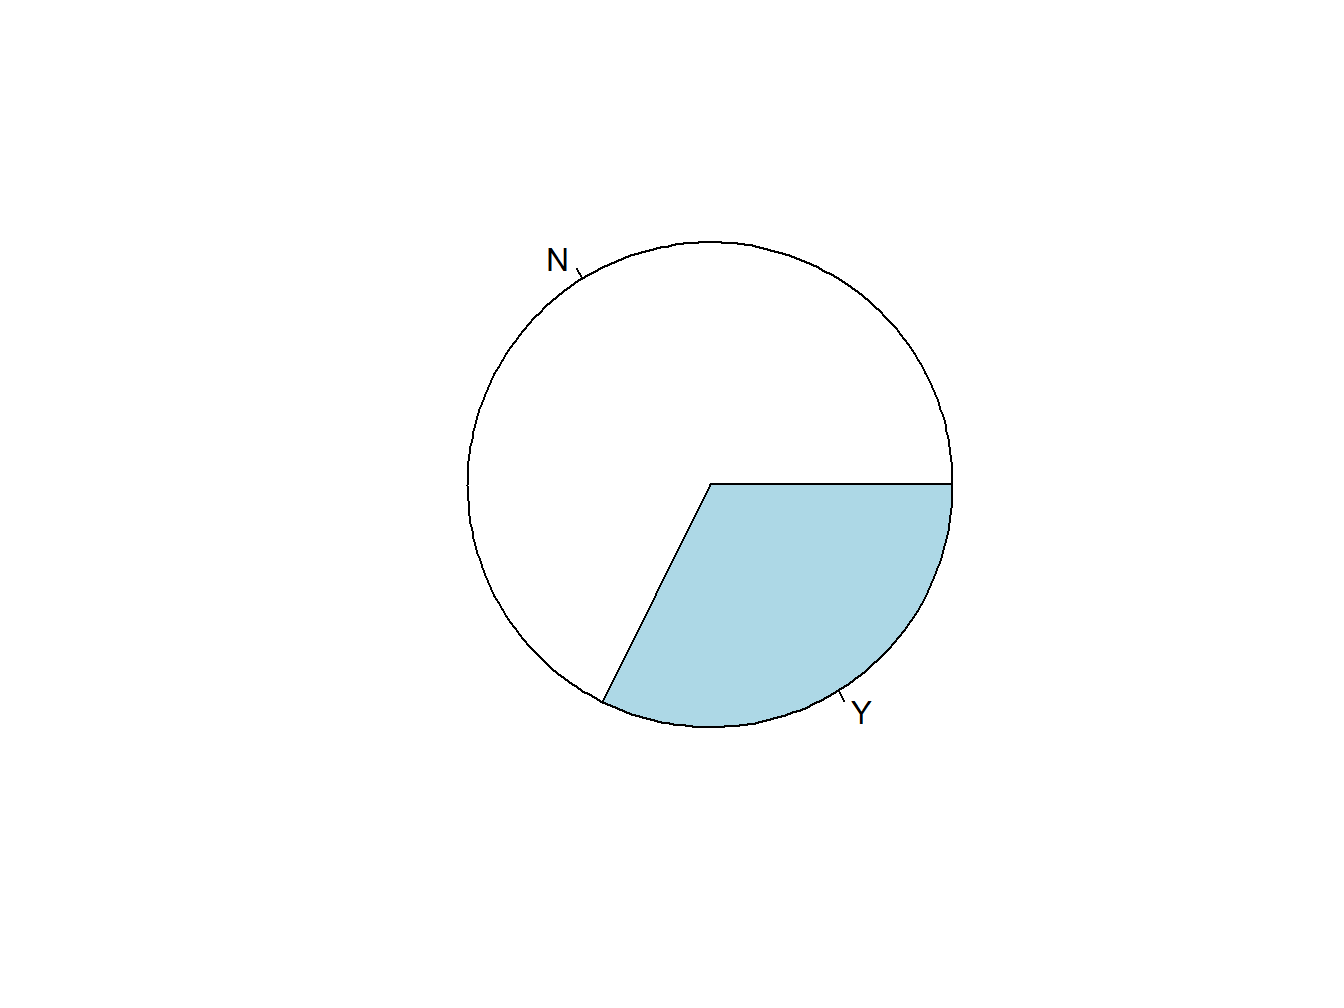 An Unadorned Pie Chart